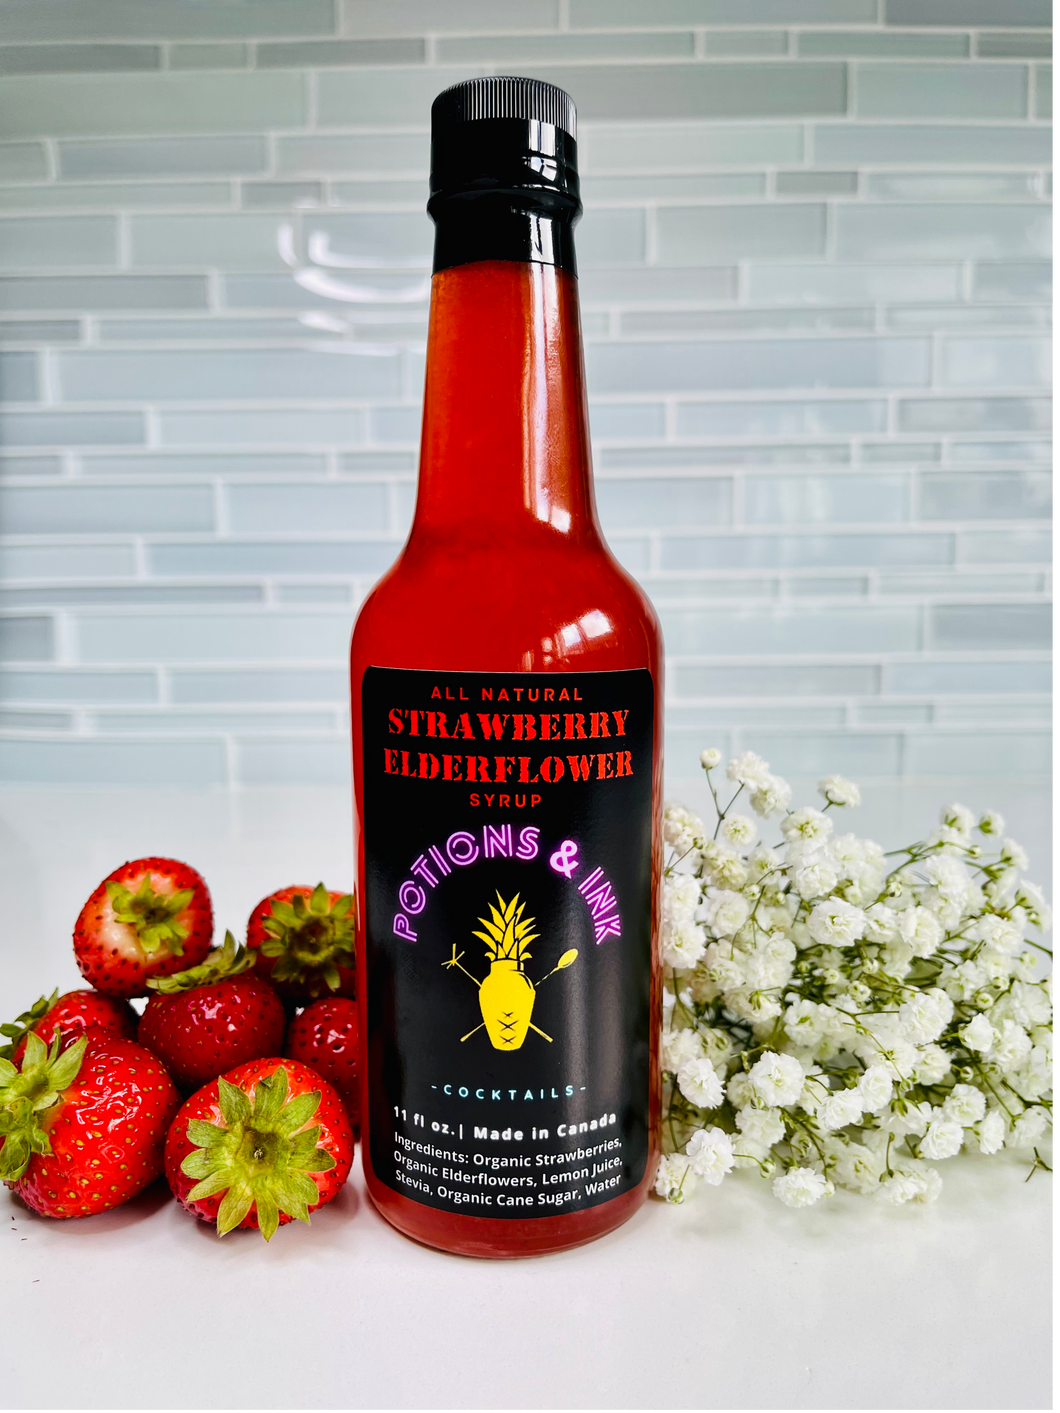 All Natural Strawberry Elderflower Syrup